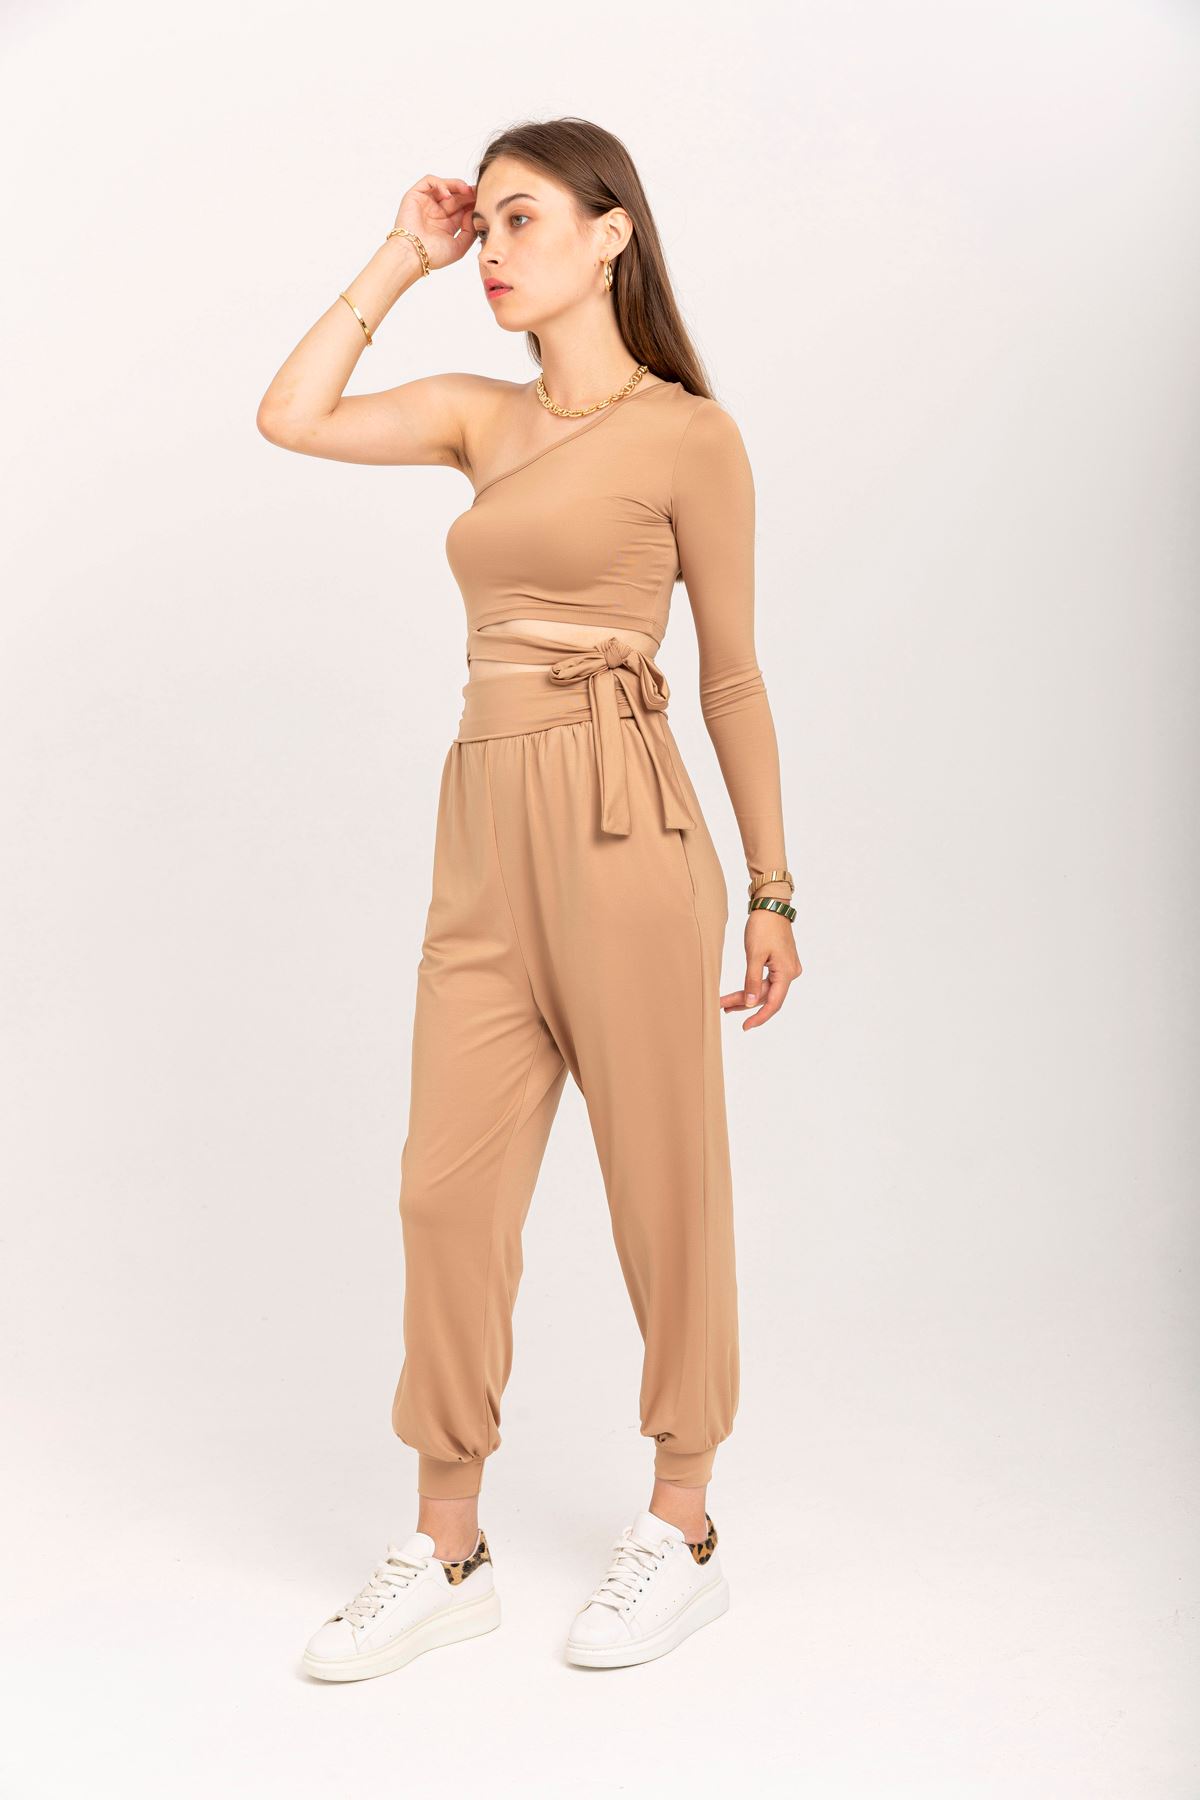 Scuba Fabric Tight Fit Asymmetrical Women'S Set 2 Pieces - Light Brown